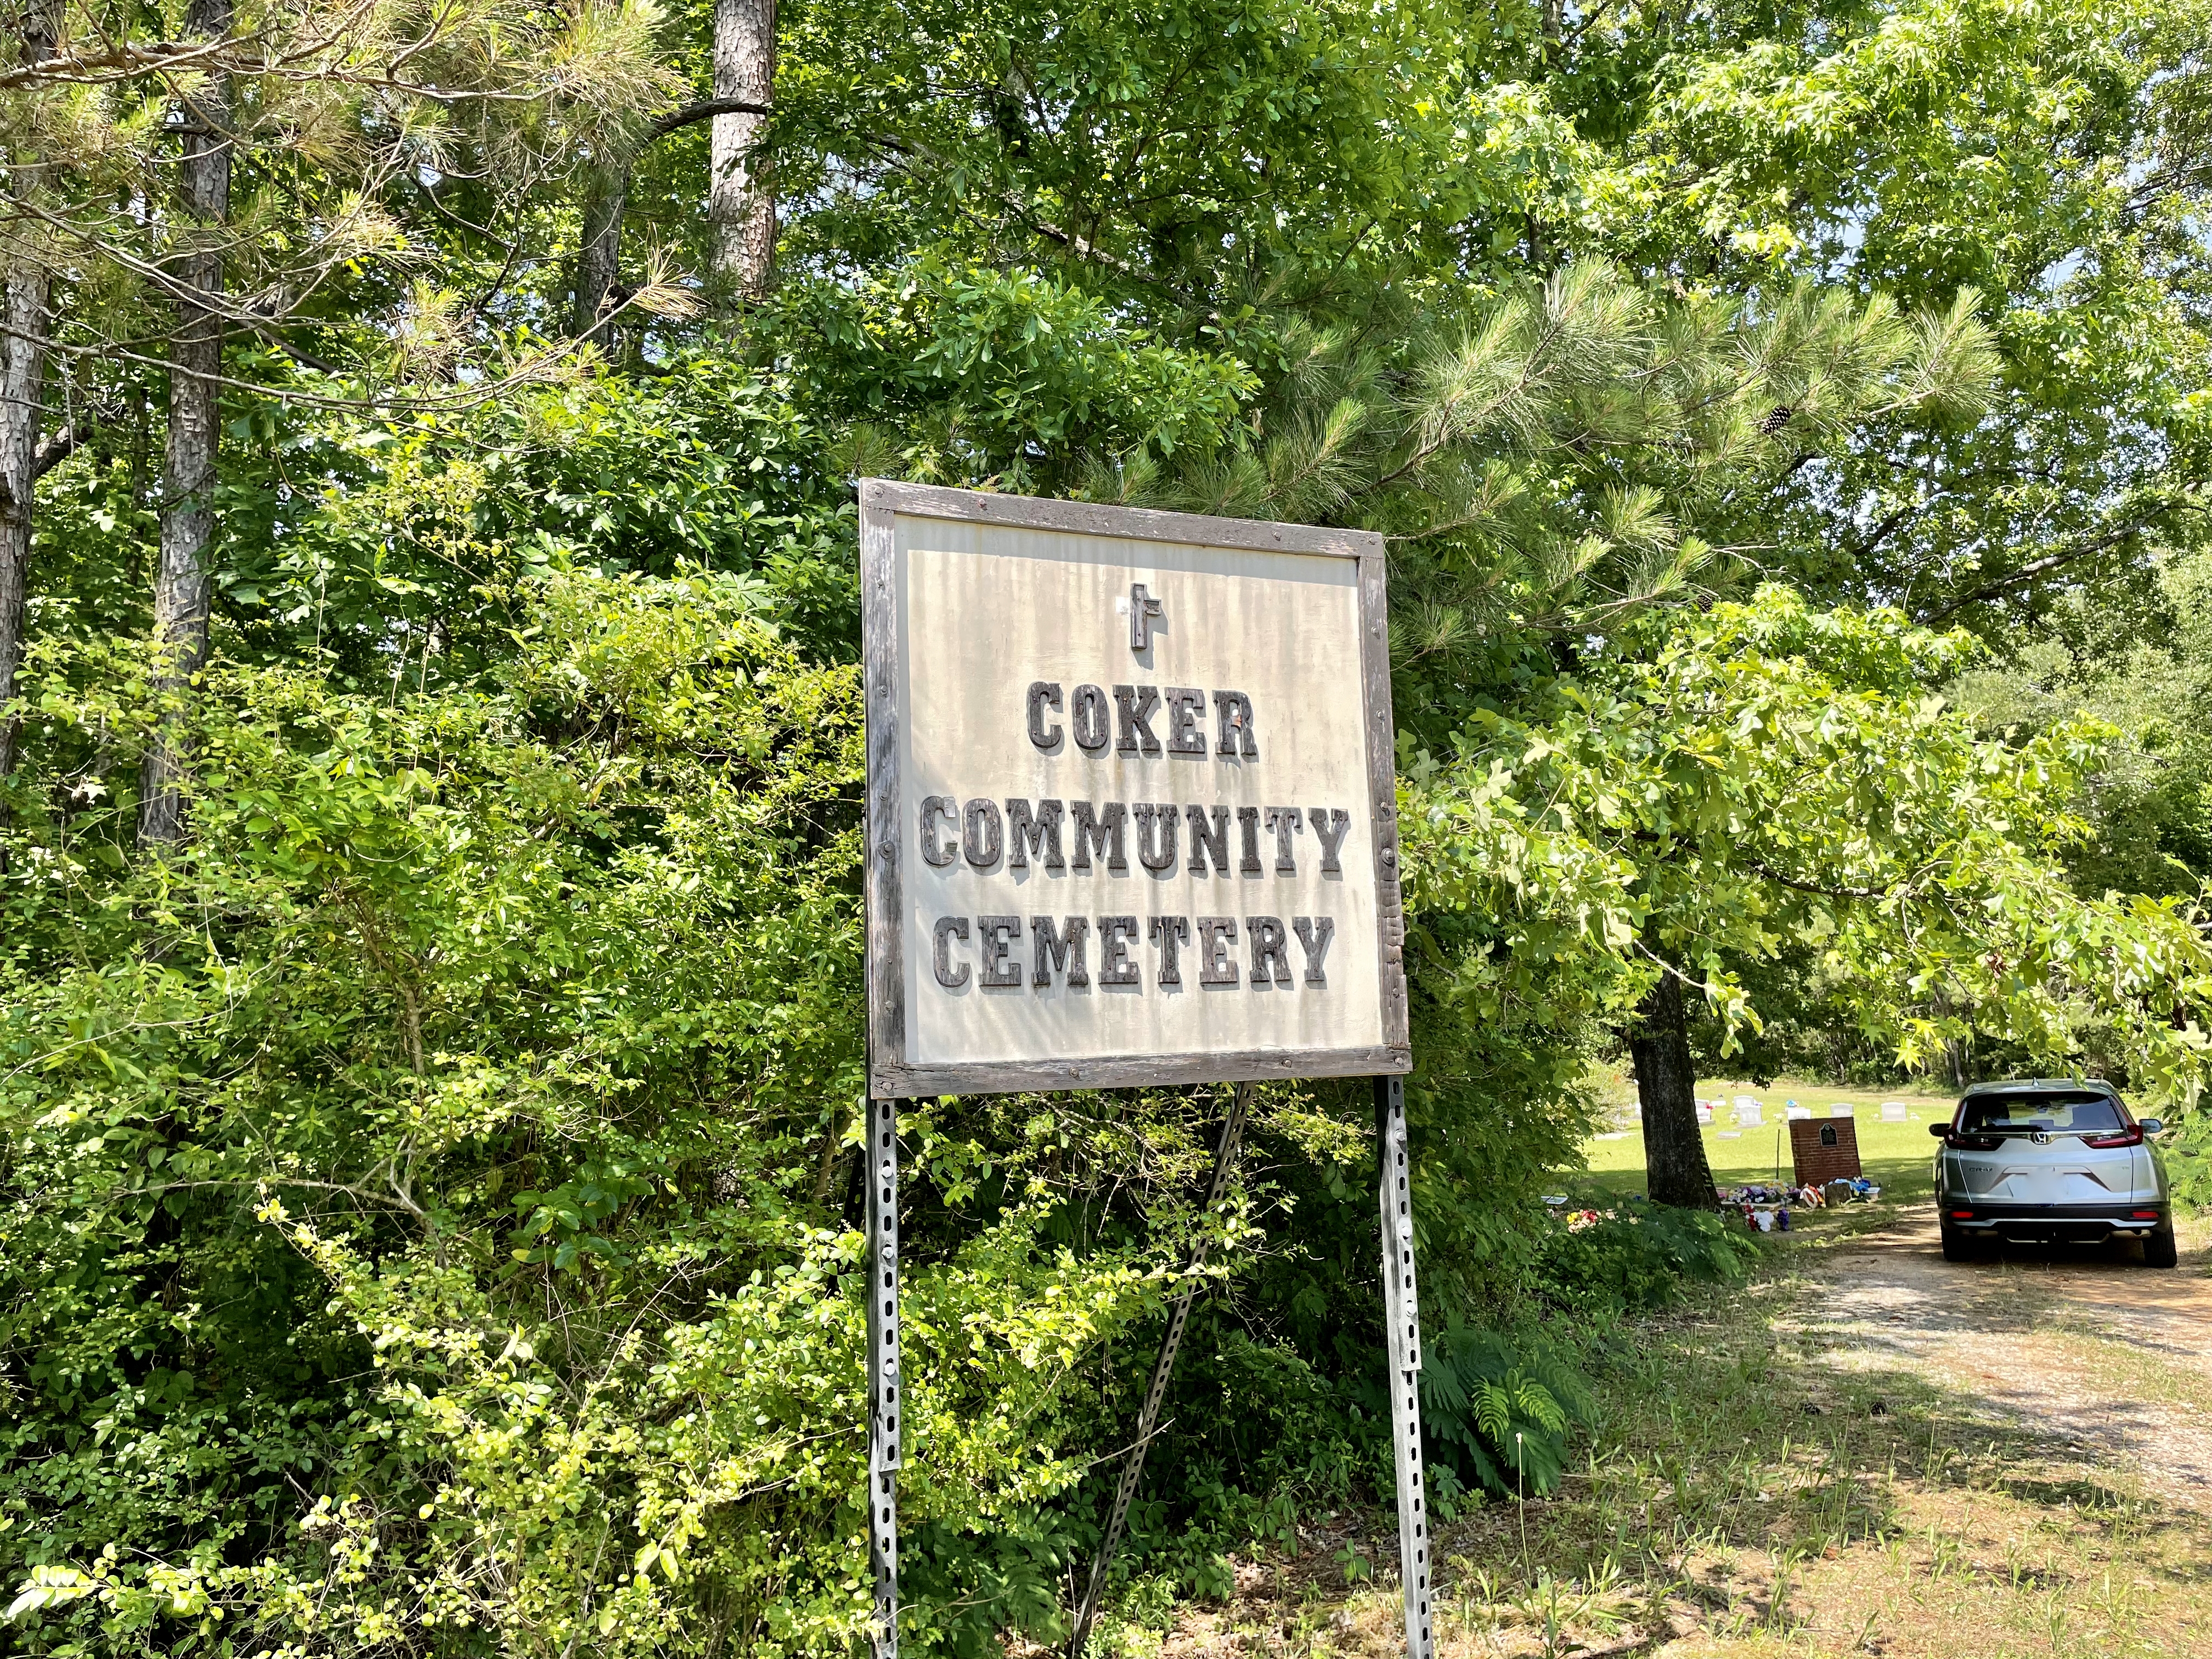 Coker Community Cemetery along US Highway 82.